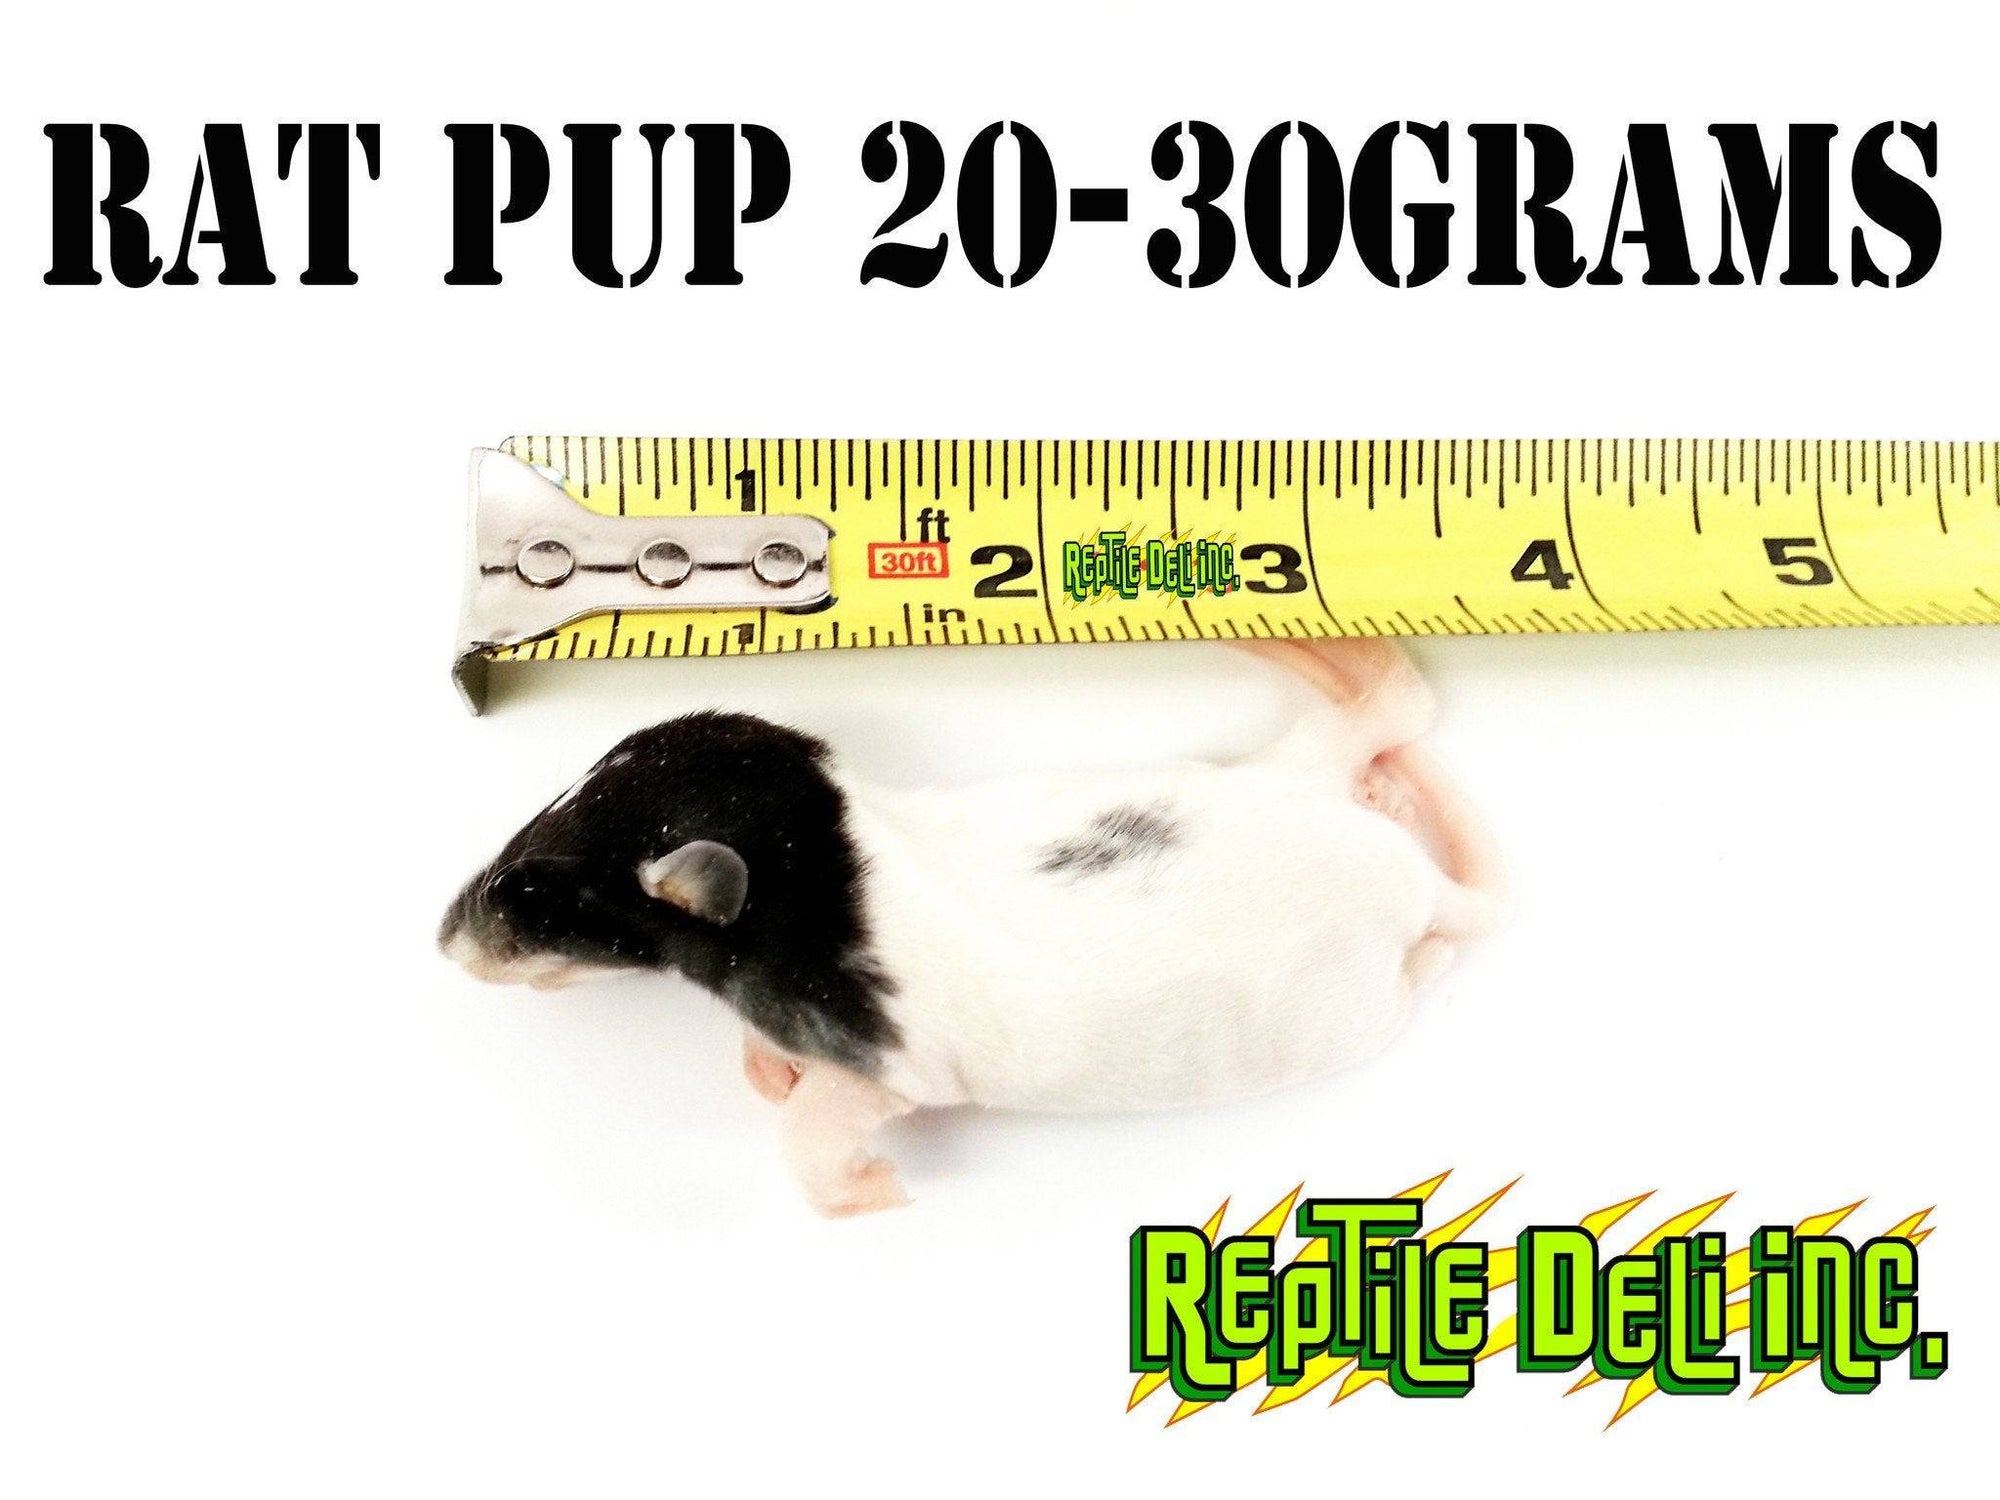 Frozen Rat - Pup - Reptile Deli Inc.